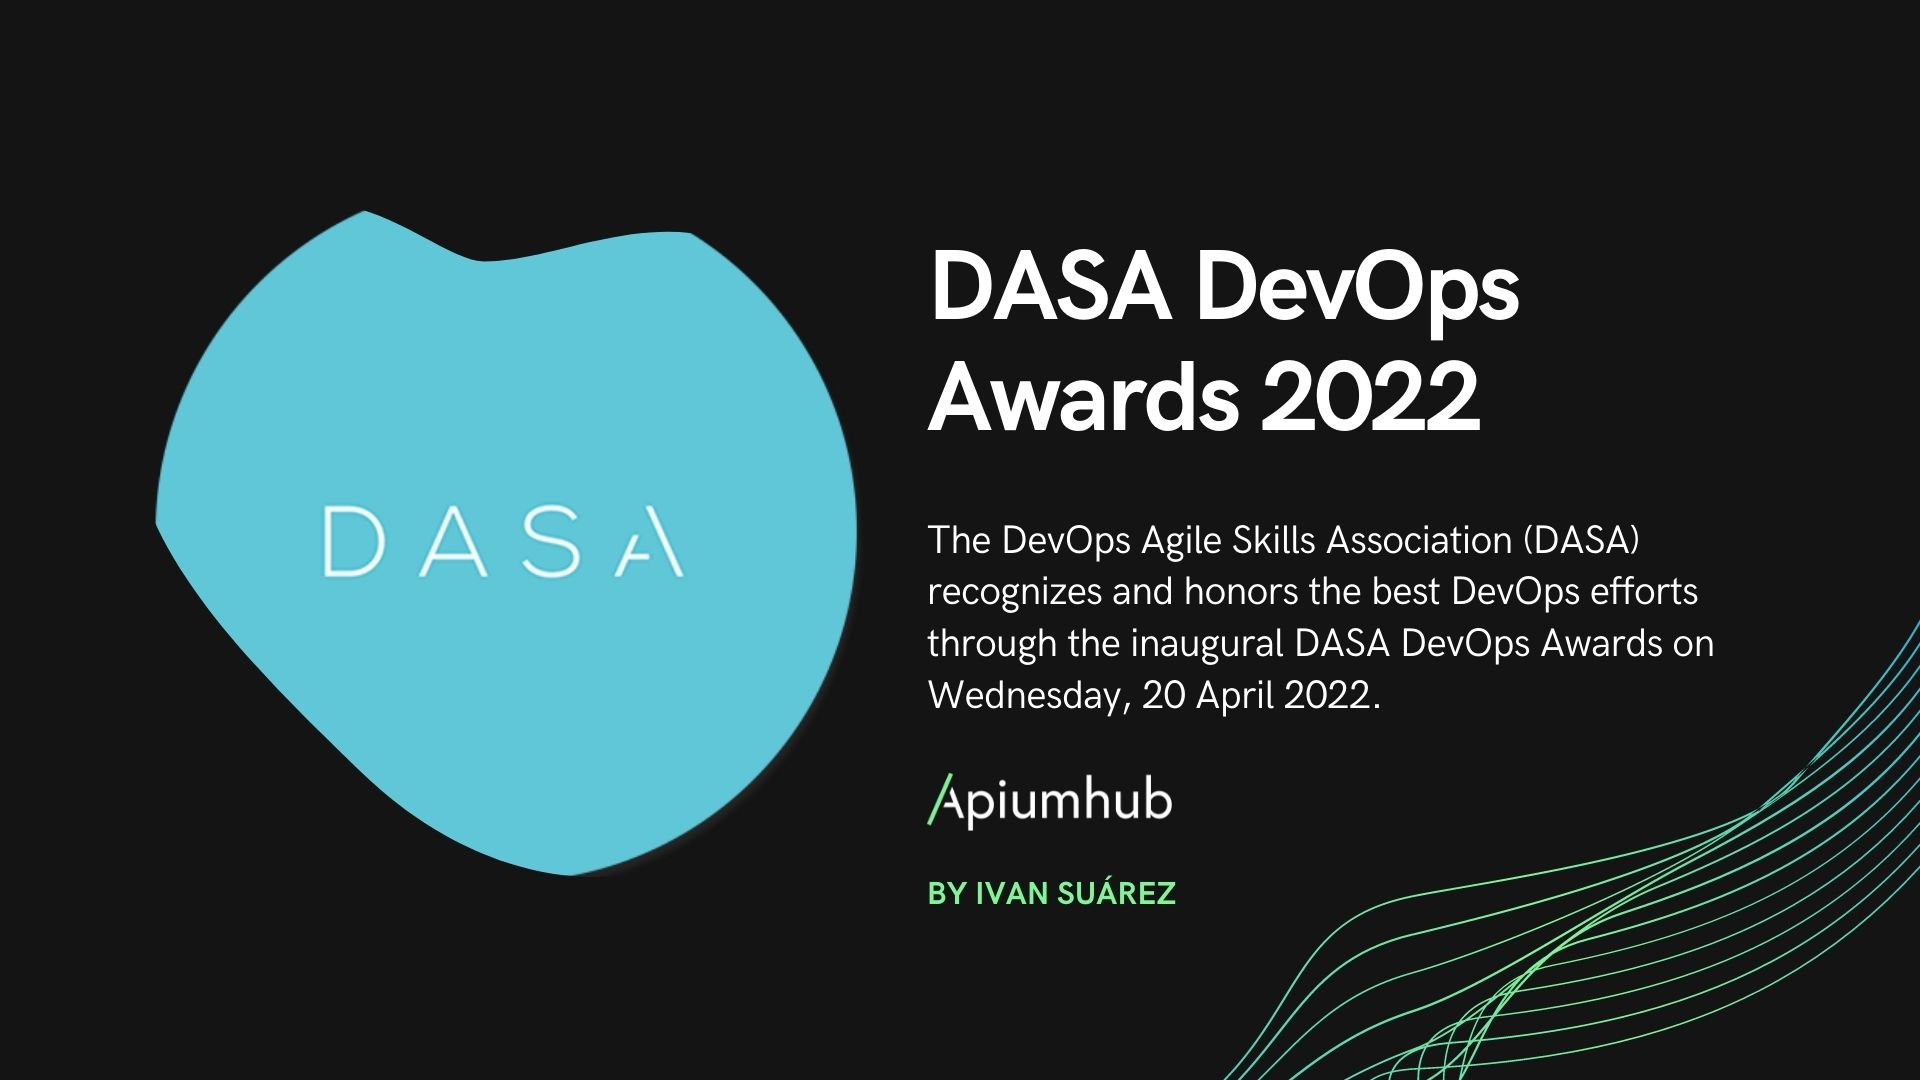 DASA DevOps Awards 2022: Nominations Open